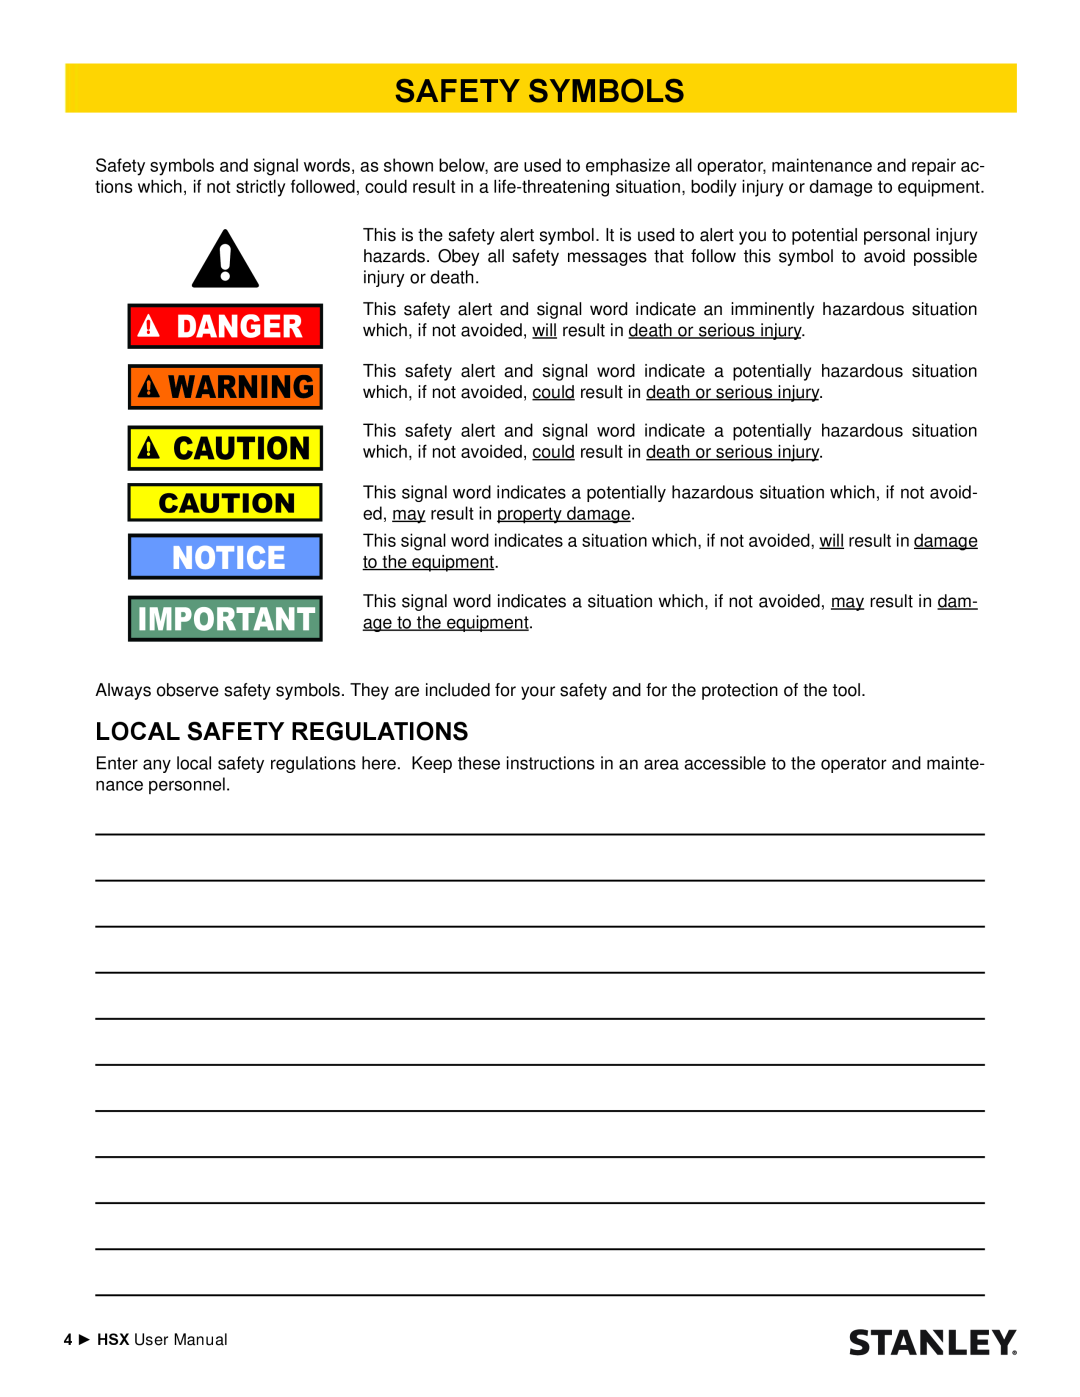 Stanley Black & Decker HSX SERIES user manual Safety Symbols, Local Safety Regulations, Danger 